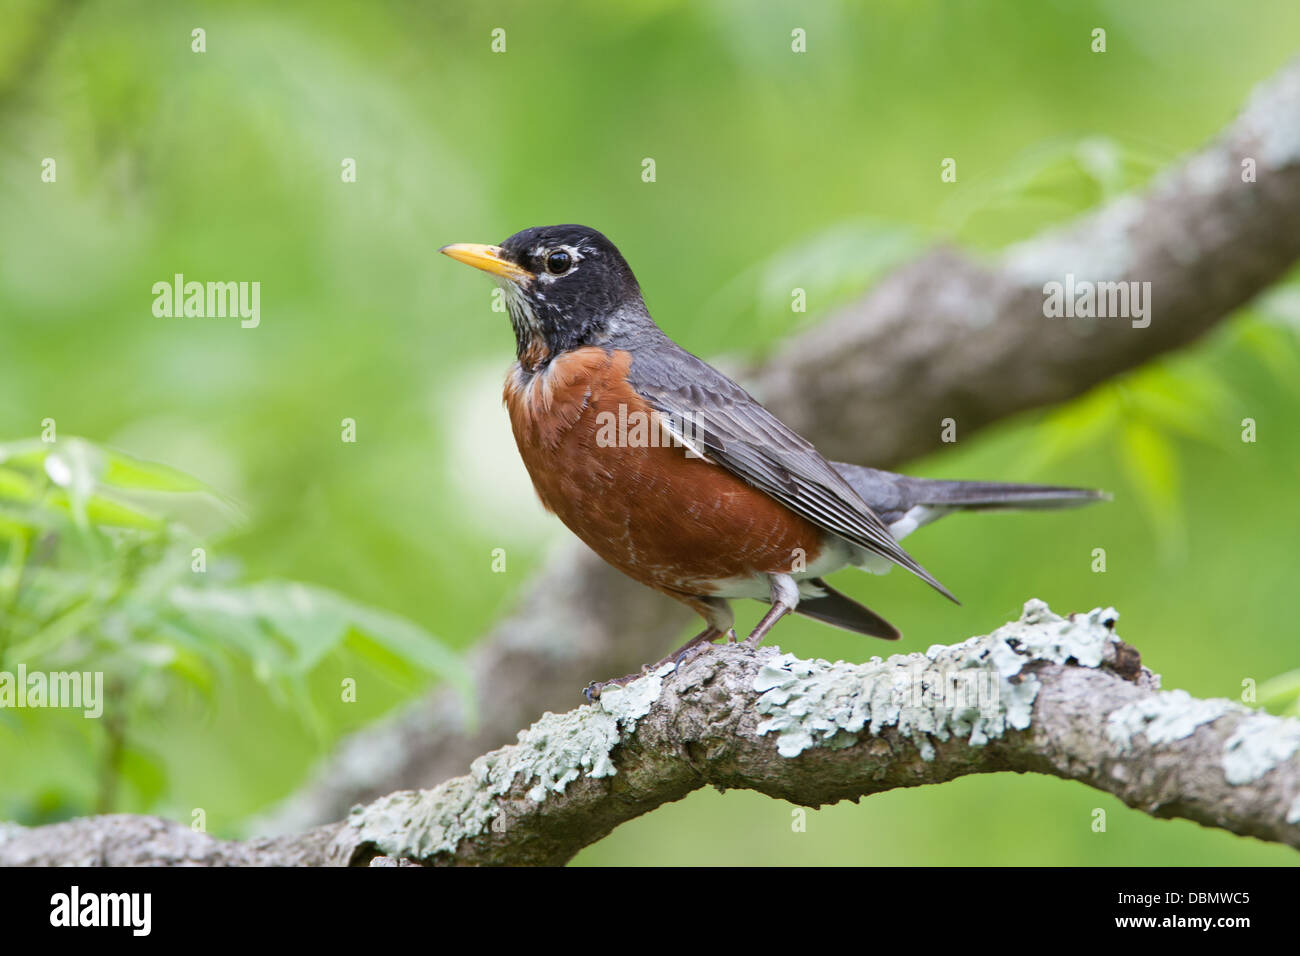 American Robin perching bird songbird Ornithology Science Nature Wildlife Environment Stock Photo